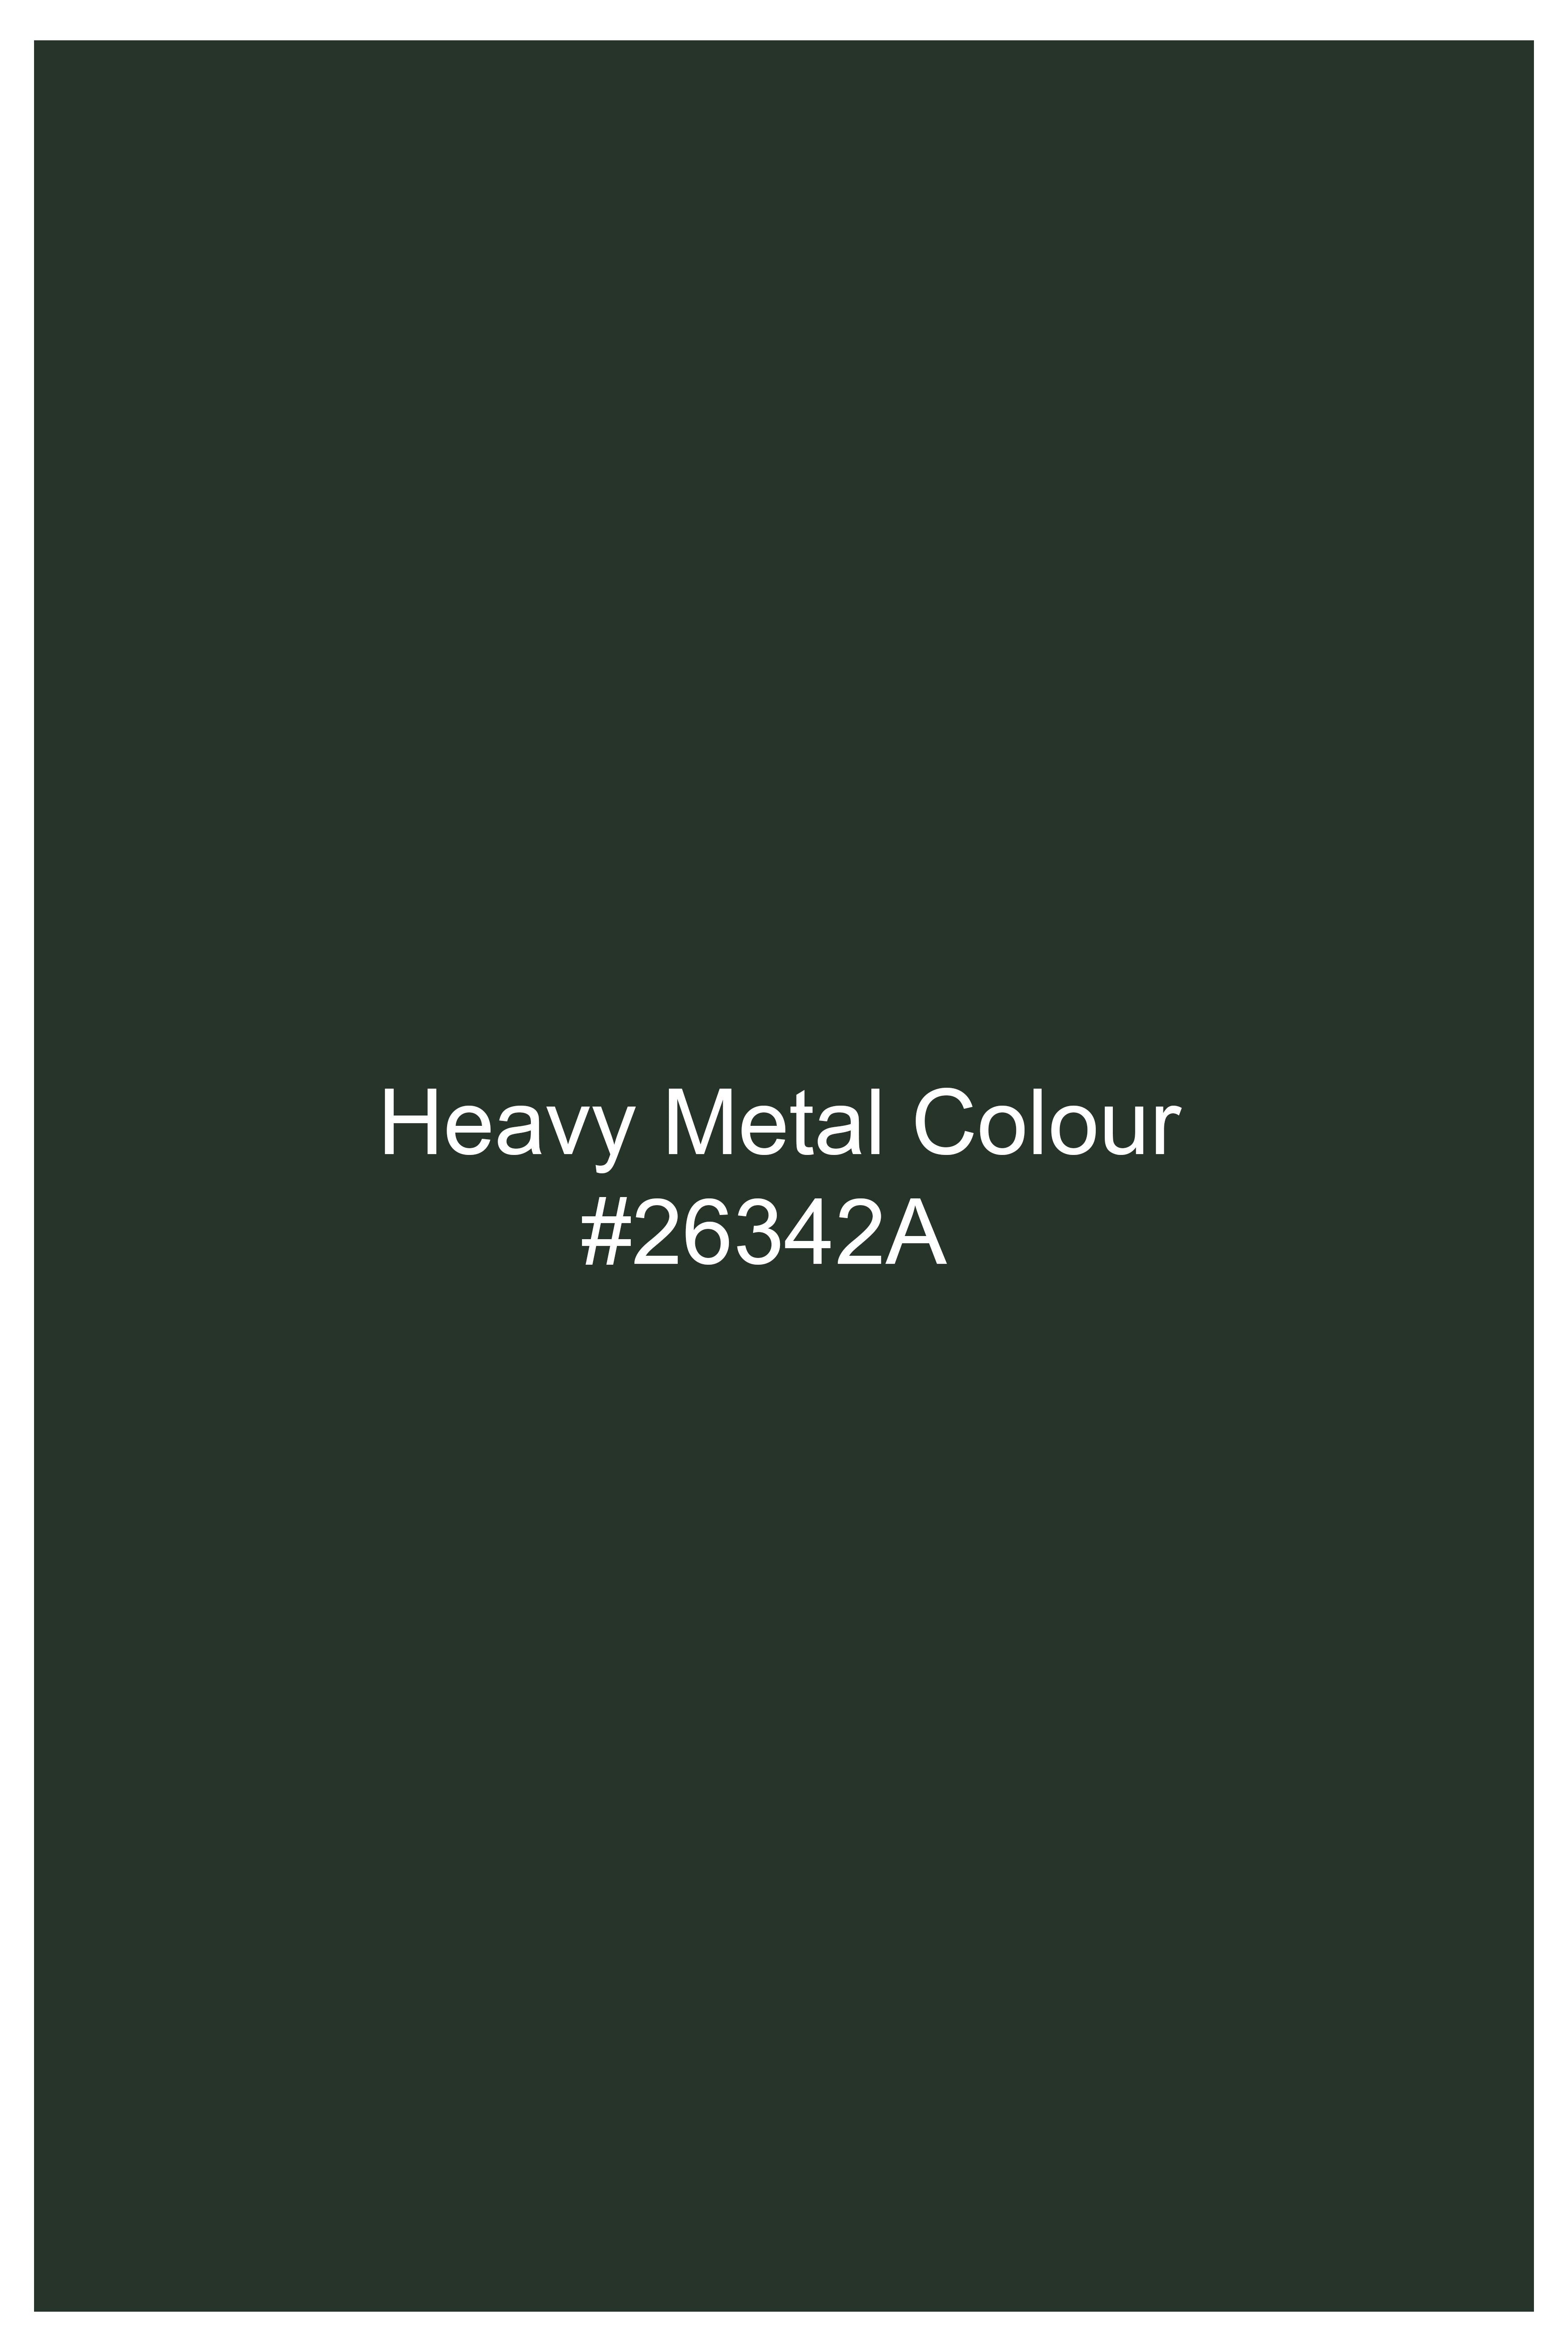 Heavy Metal Green Premium Cotton Stretchable Traveler Blazer BL2774-SB-36, BL2774-SB-38, BL2774-SB-40, BL2774-SB-42, BL2774-SB-44, BL2774-SB-46, BL2774-SB-48, BL2774-SB-50, BL2774-SB-52, BL2774-SB-54, BL2774-SB-56, BL2774-SB-58, BL2774-SB-60